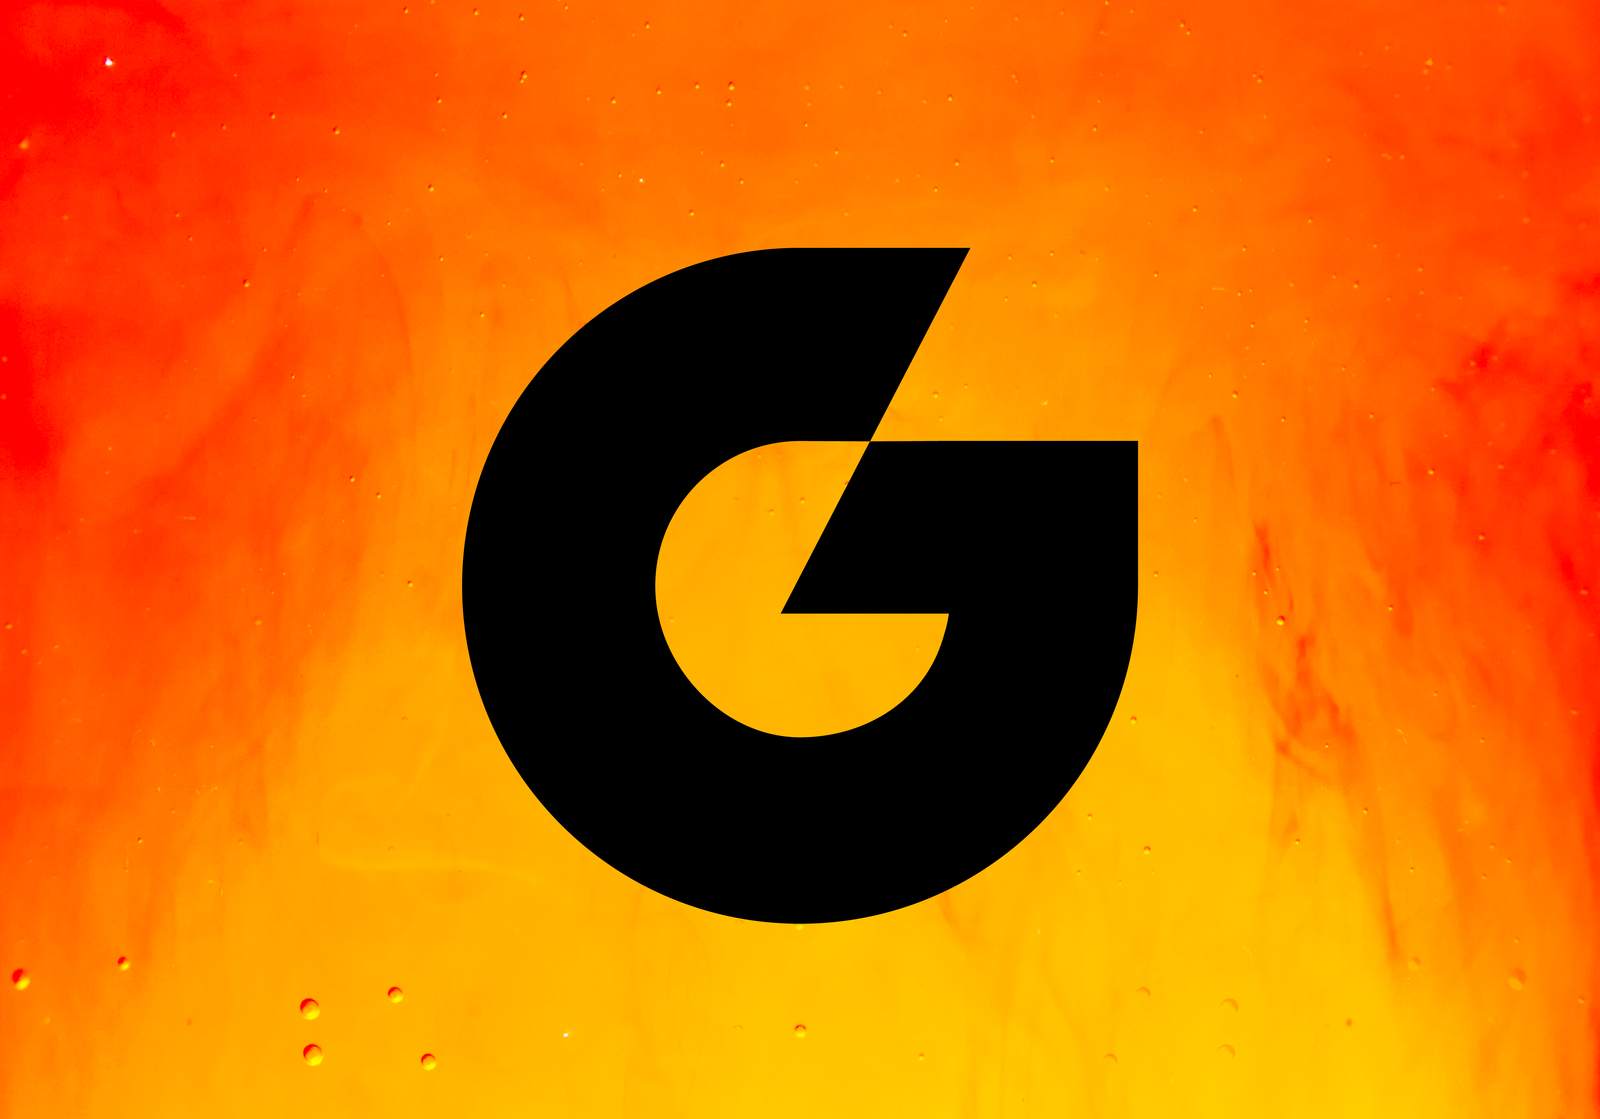 Gatorade logo concept by Vadim Carazan on Dribbble